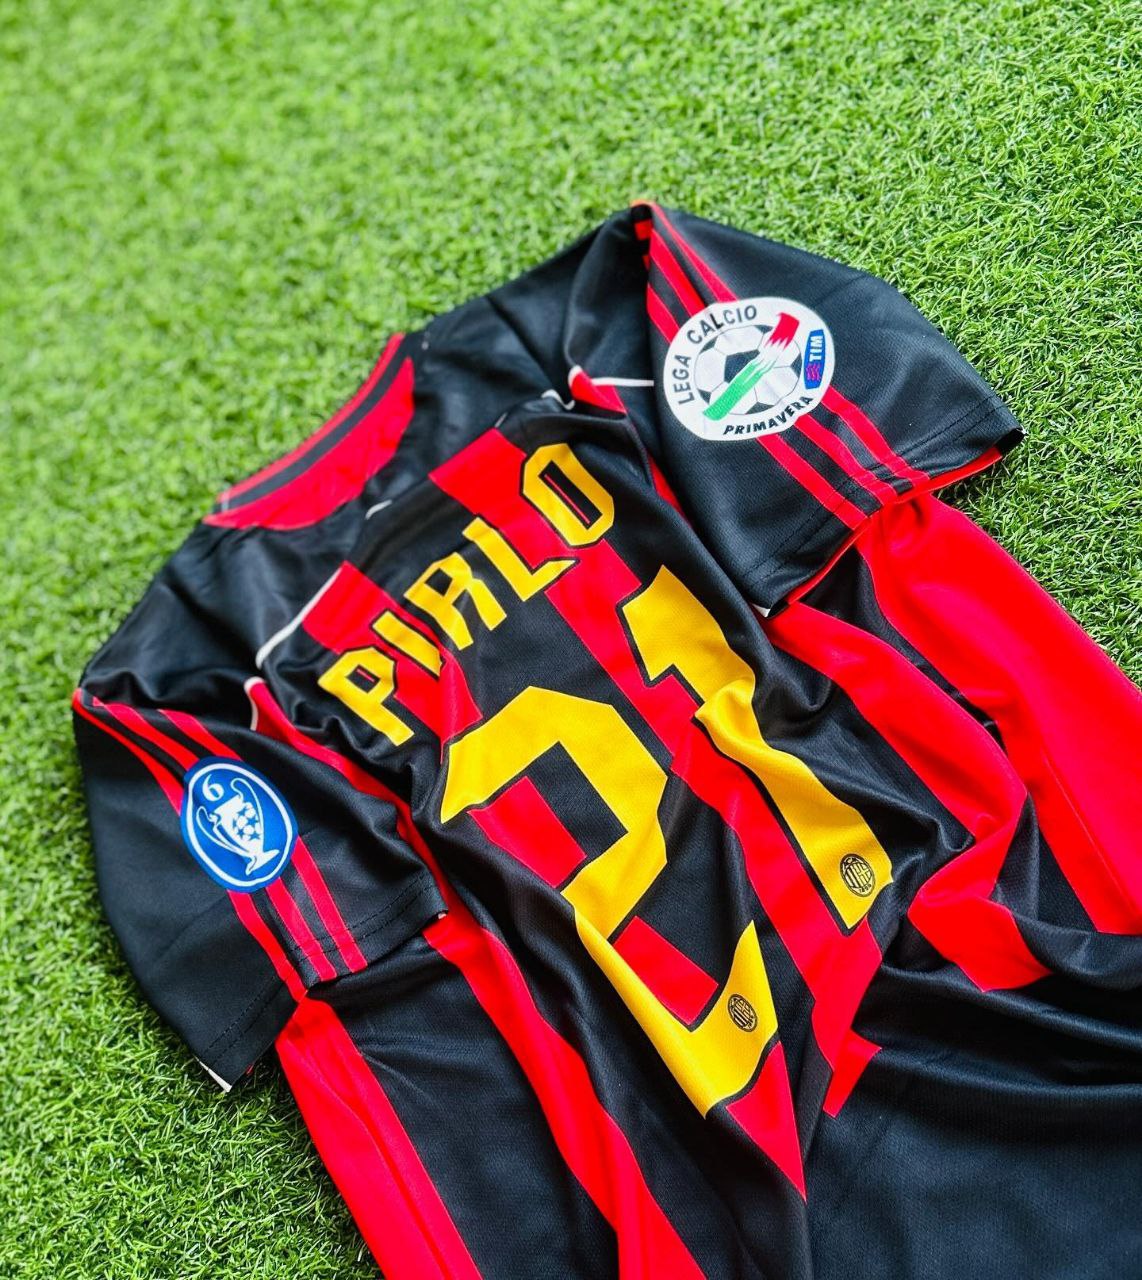 Pirlo 2006-07 AC Milan Retro Jersey